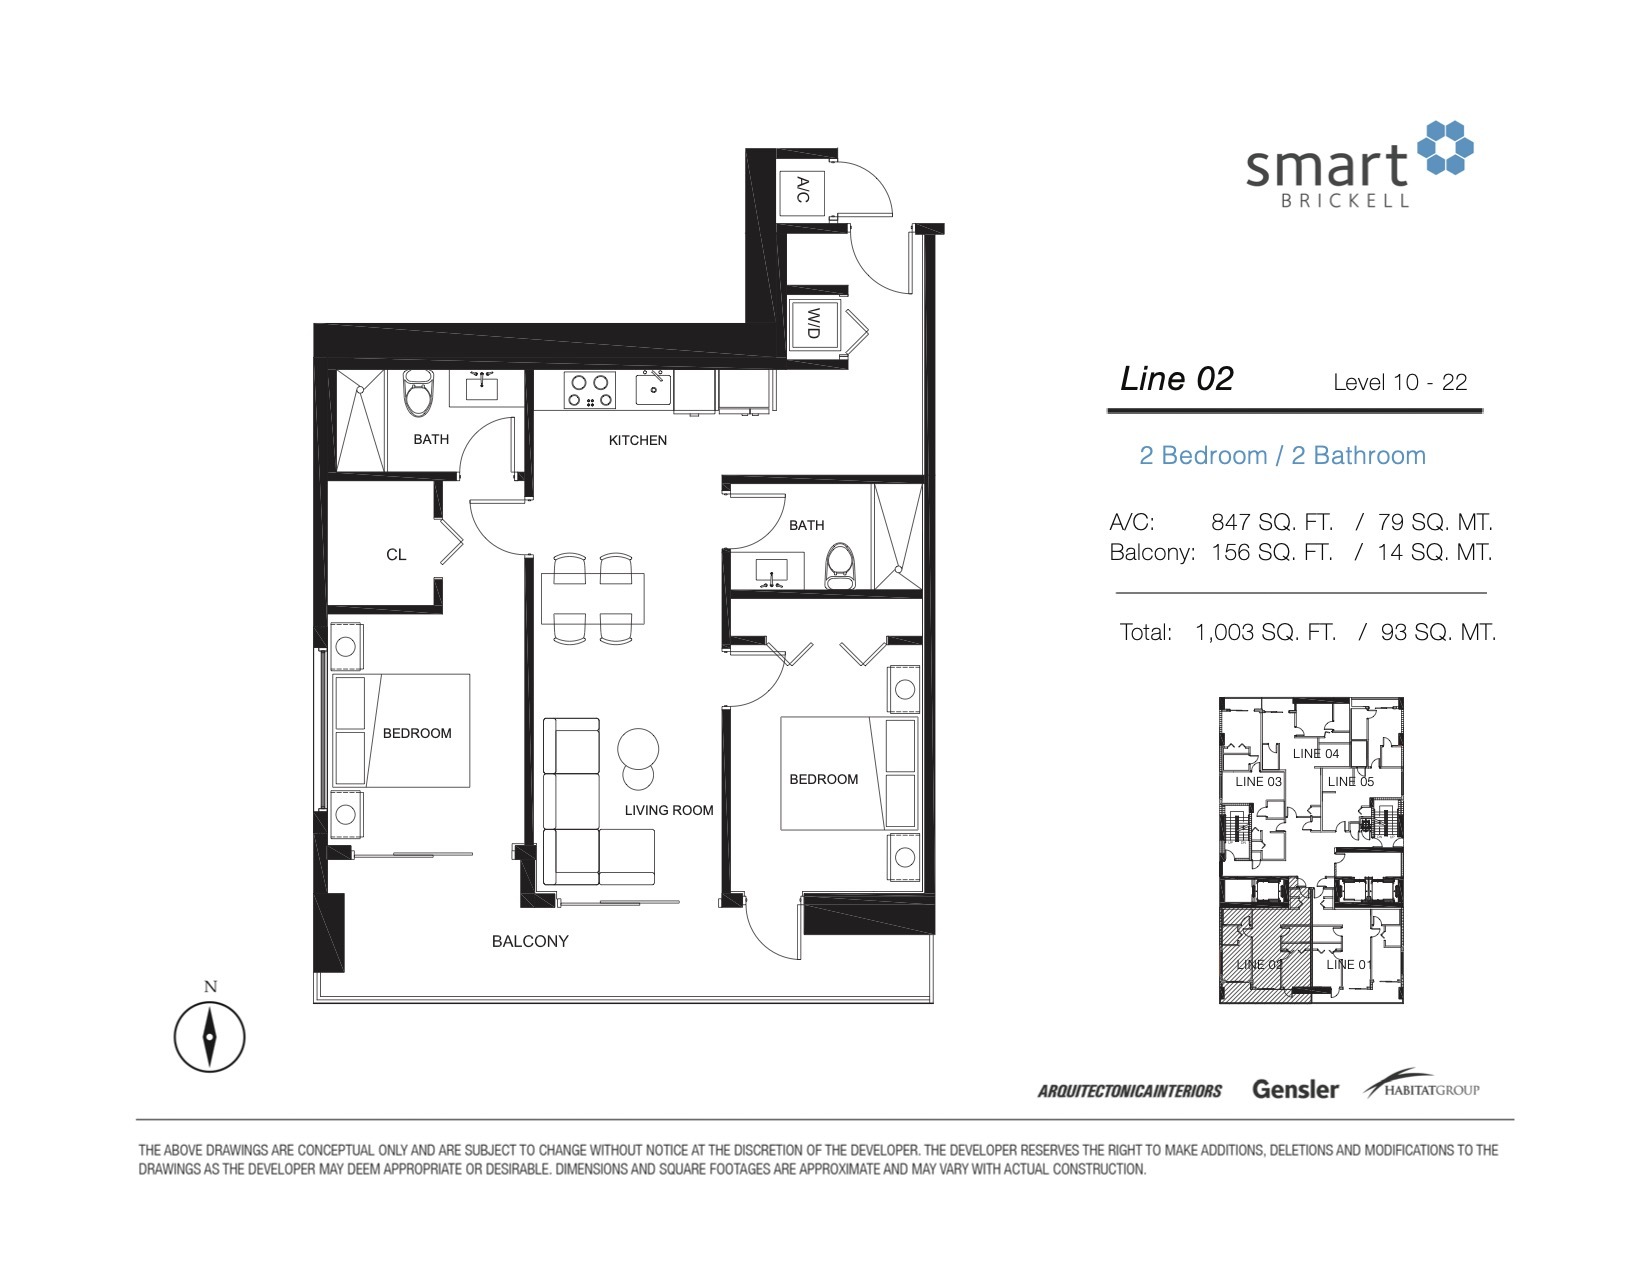 Floor Plan for Smart Brickell Floorplans, Line 02 Level 10-22